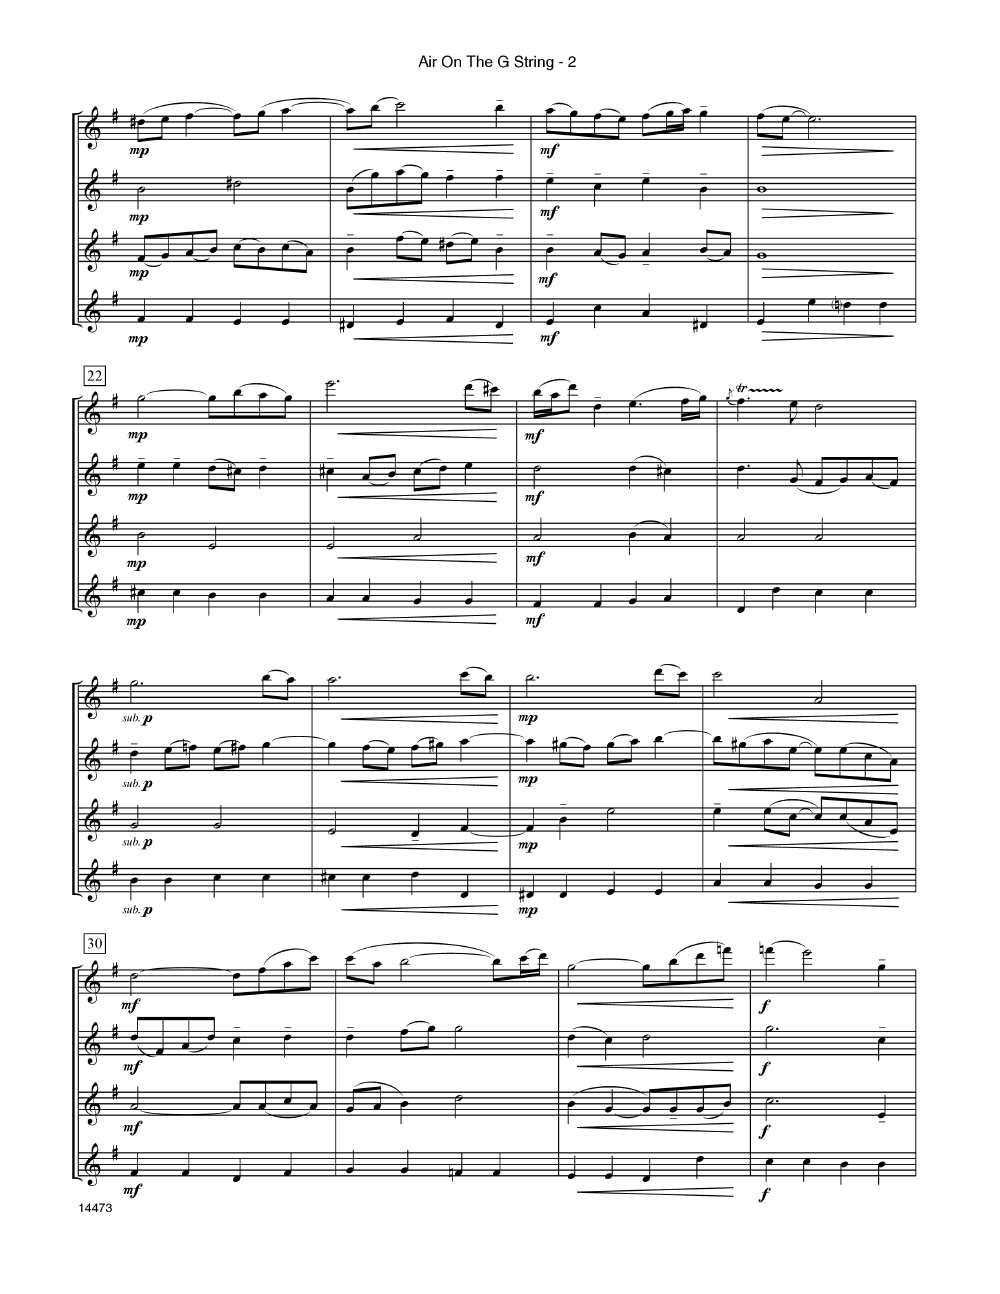 Air on the G String Flute Quartet (C19)